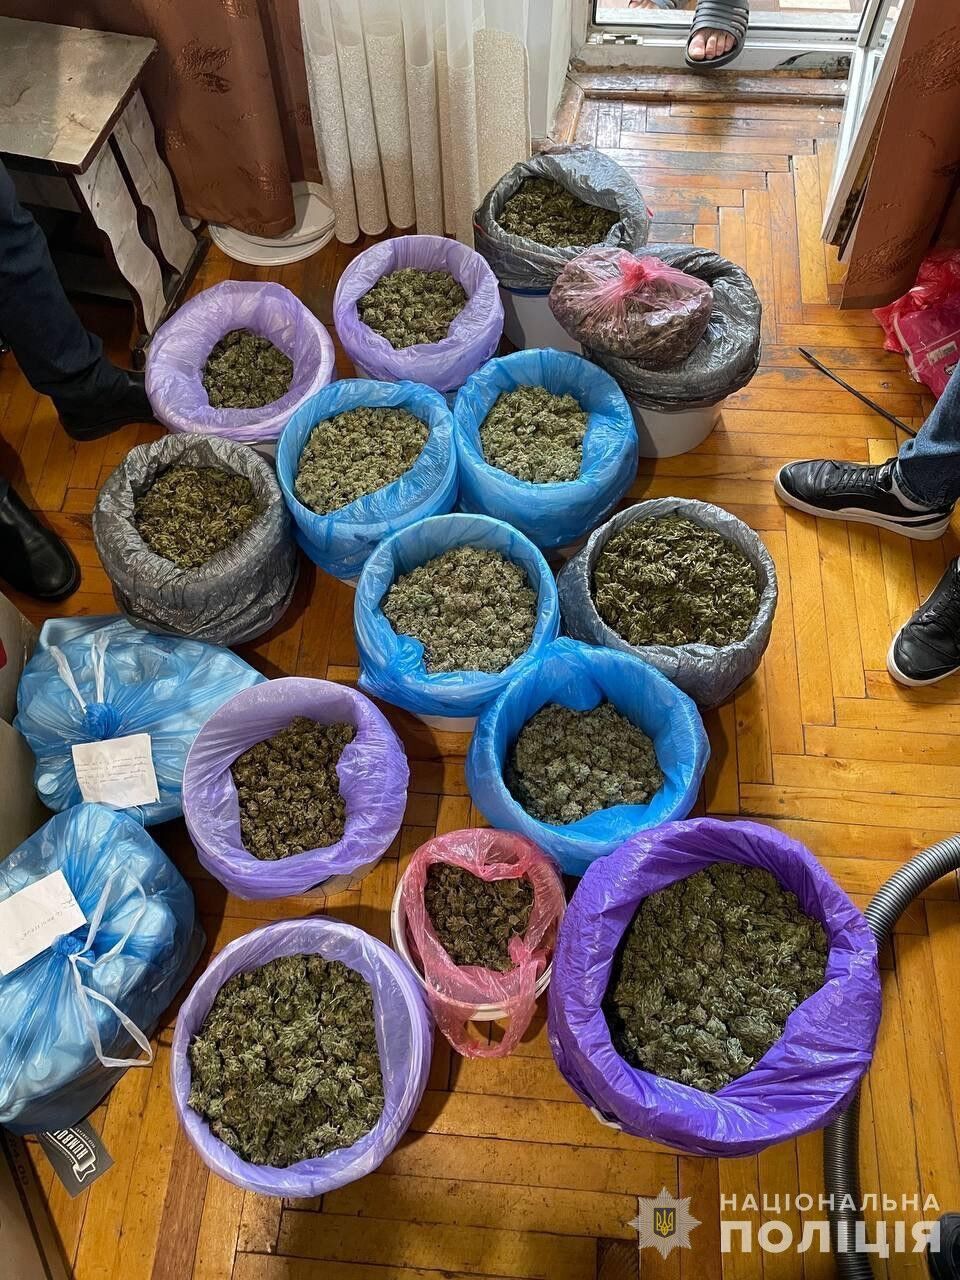 Копы изъяли более 85 кг наркотиков и психотропов